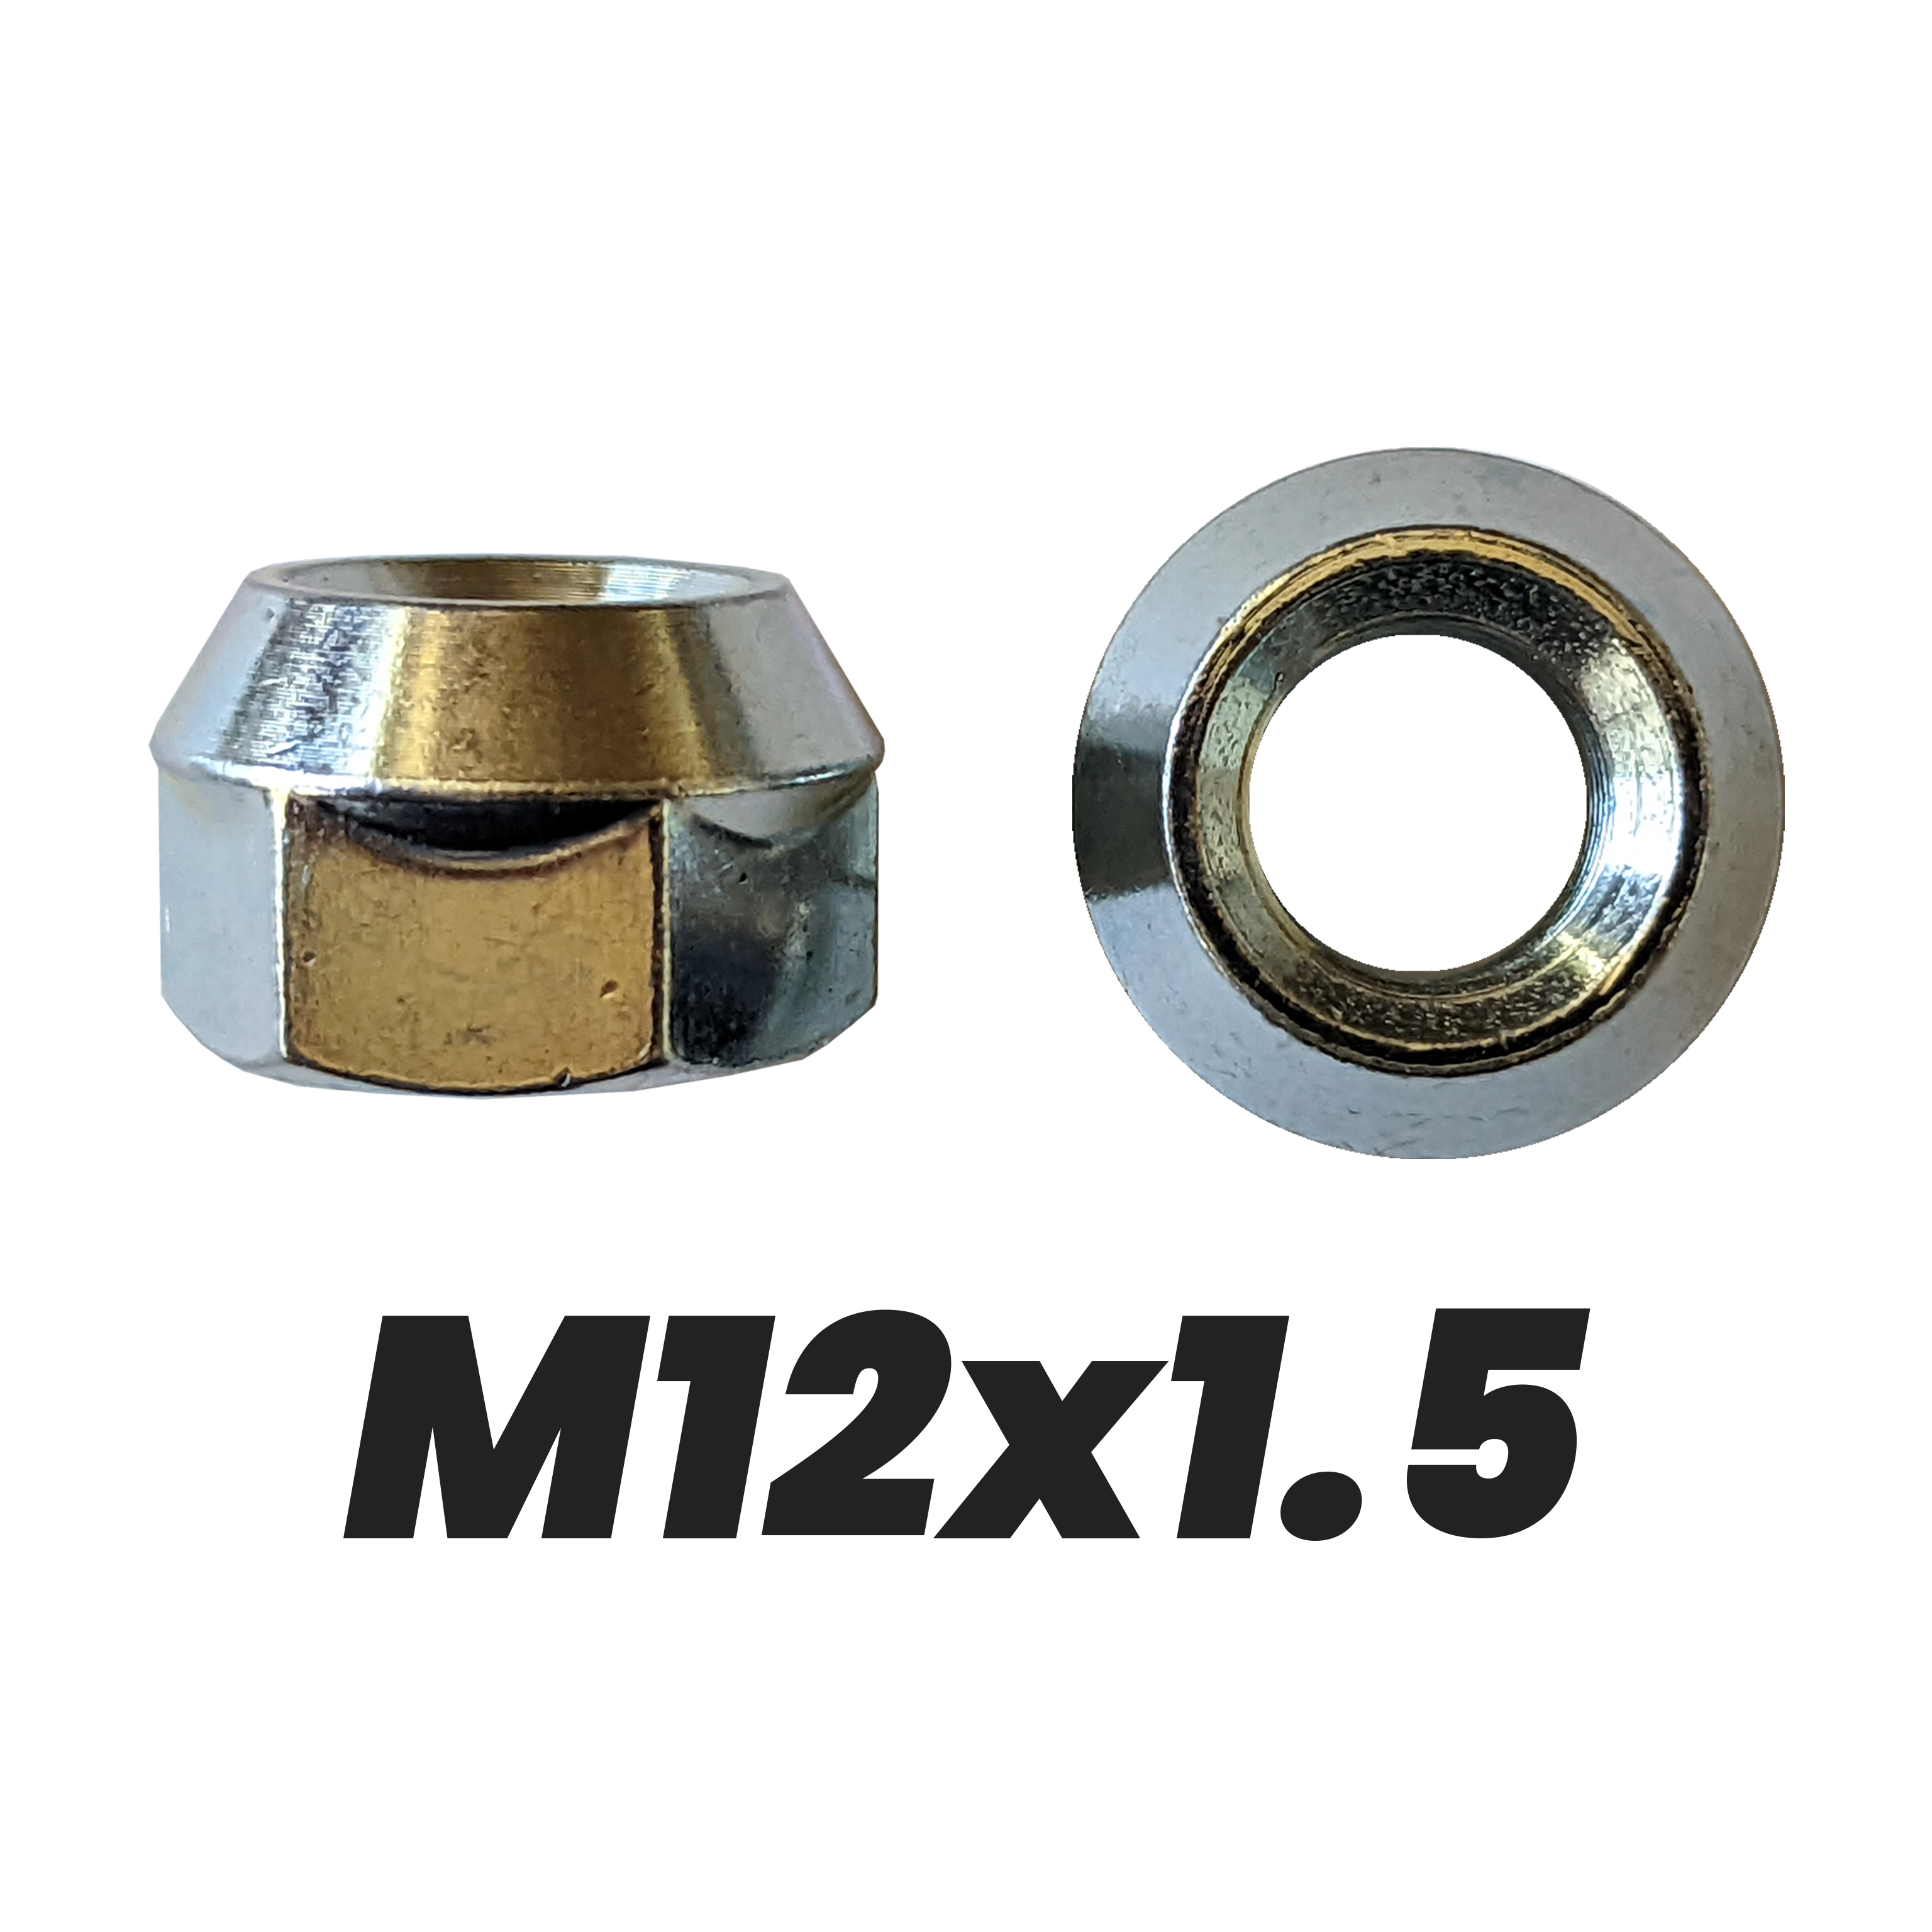 M12x1.5 Lug Nuts